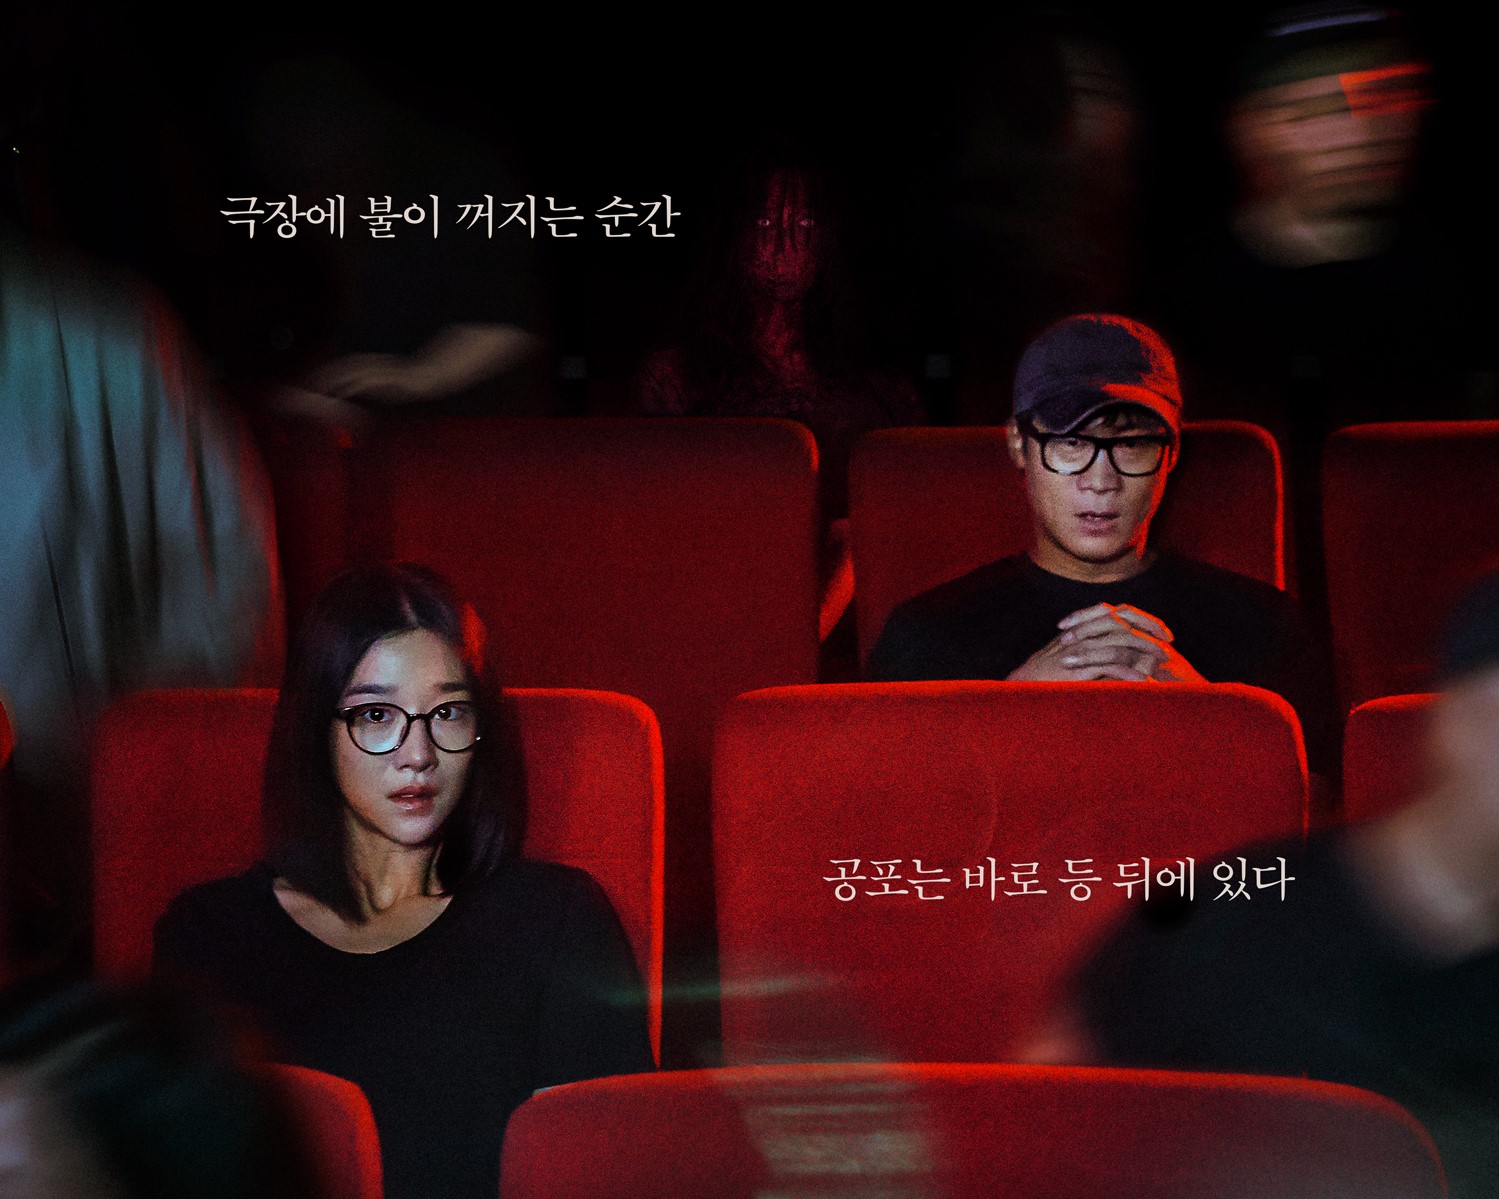 Film Horor Korea - Warning: Do Not Play